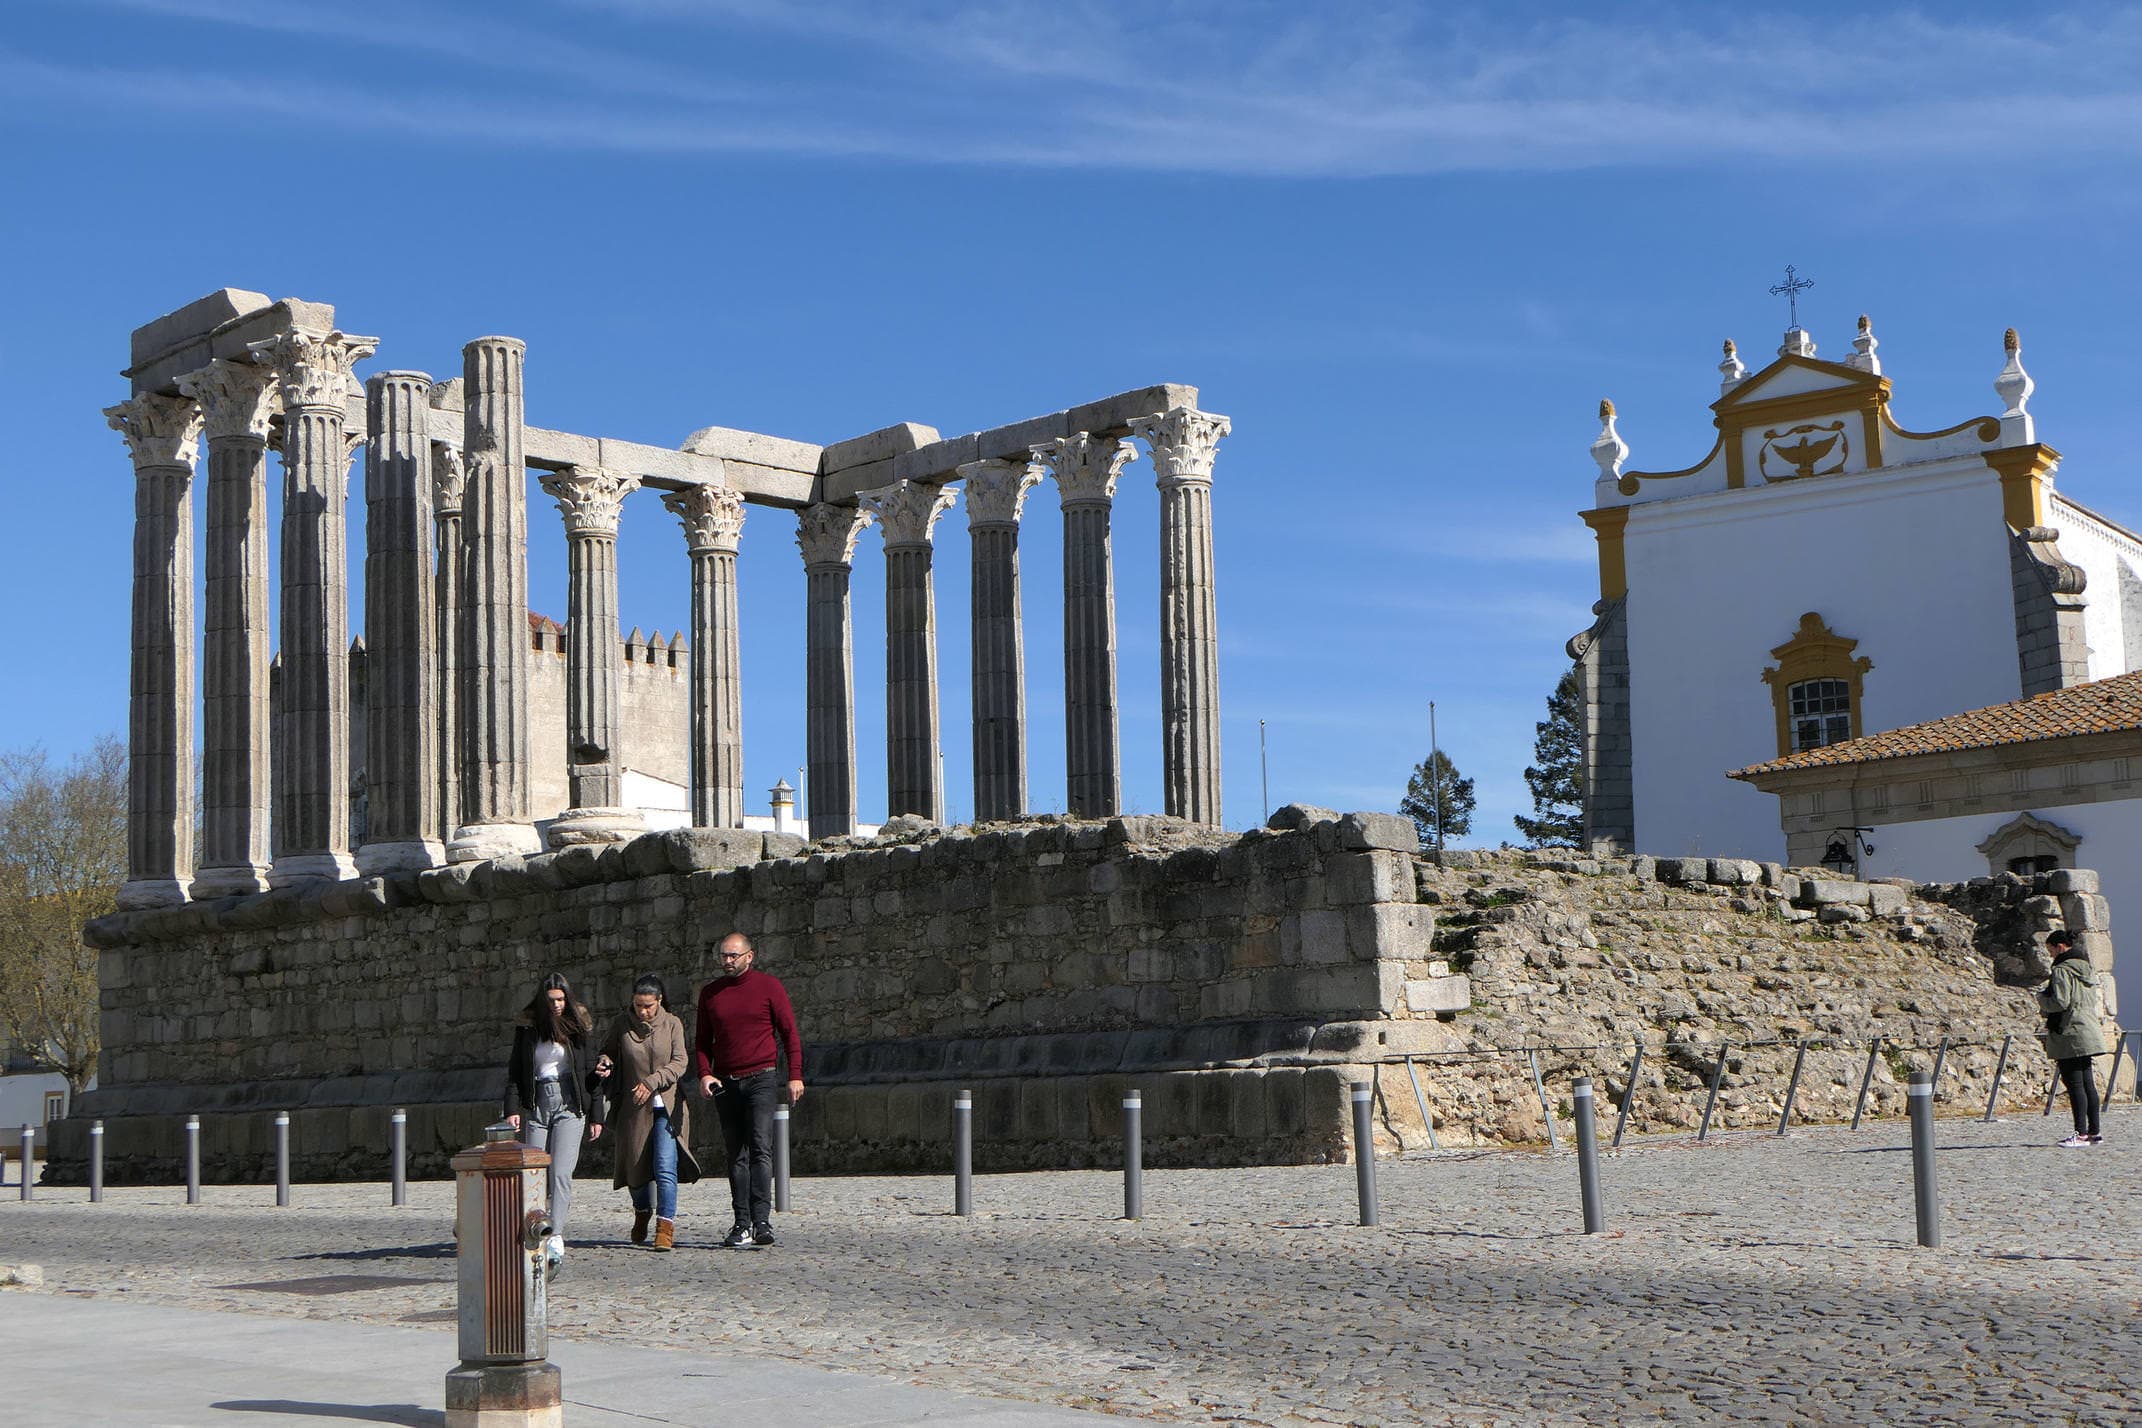 Portugal alentejo evora diana roman temple 3 c diego